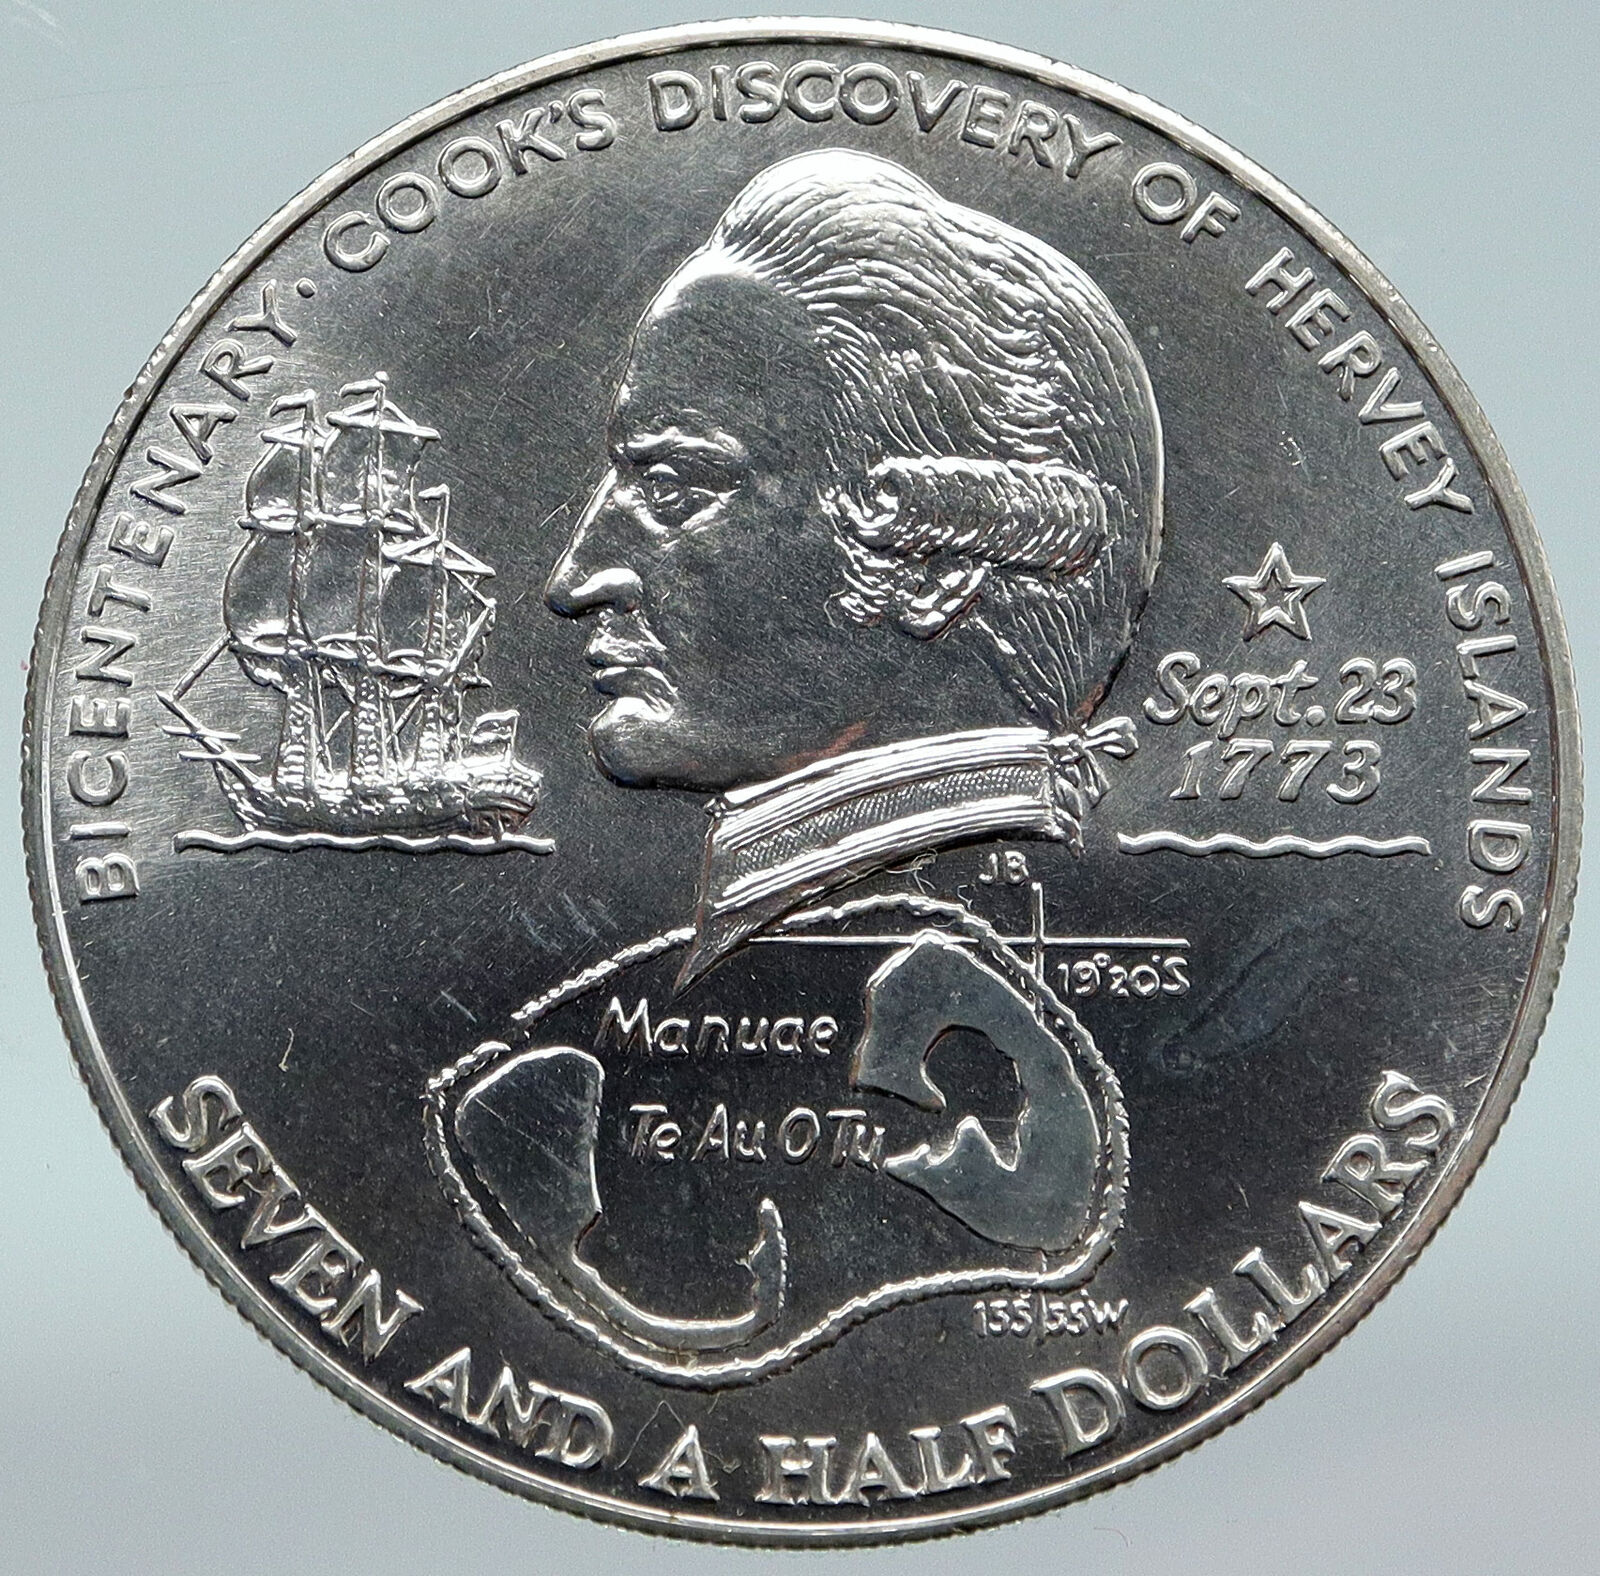 1974 COOK ISLANDS Elizabeth II James Cook Proof Silver 7.5 Dollar Coin i87084